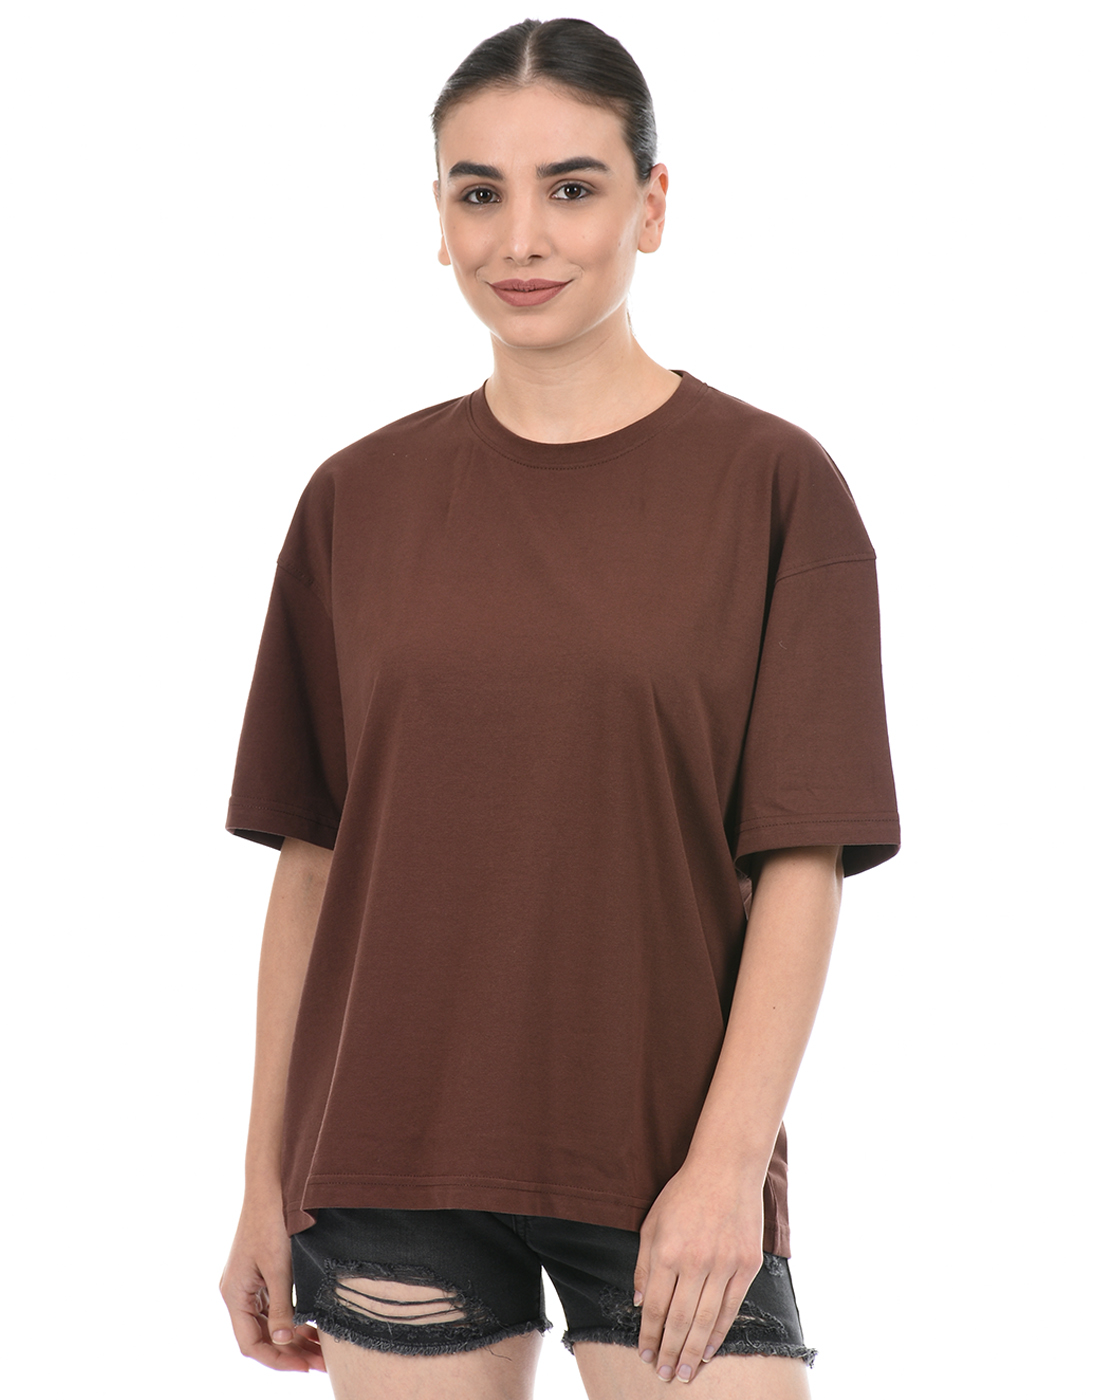 Oneway Unisex Solid Brown T-Shirt